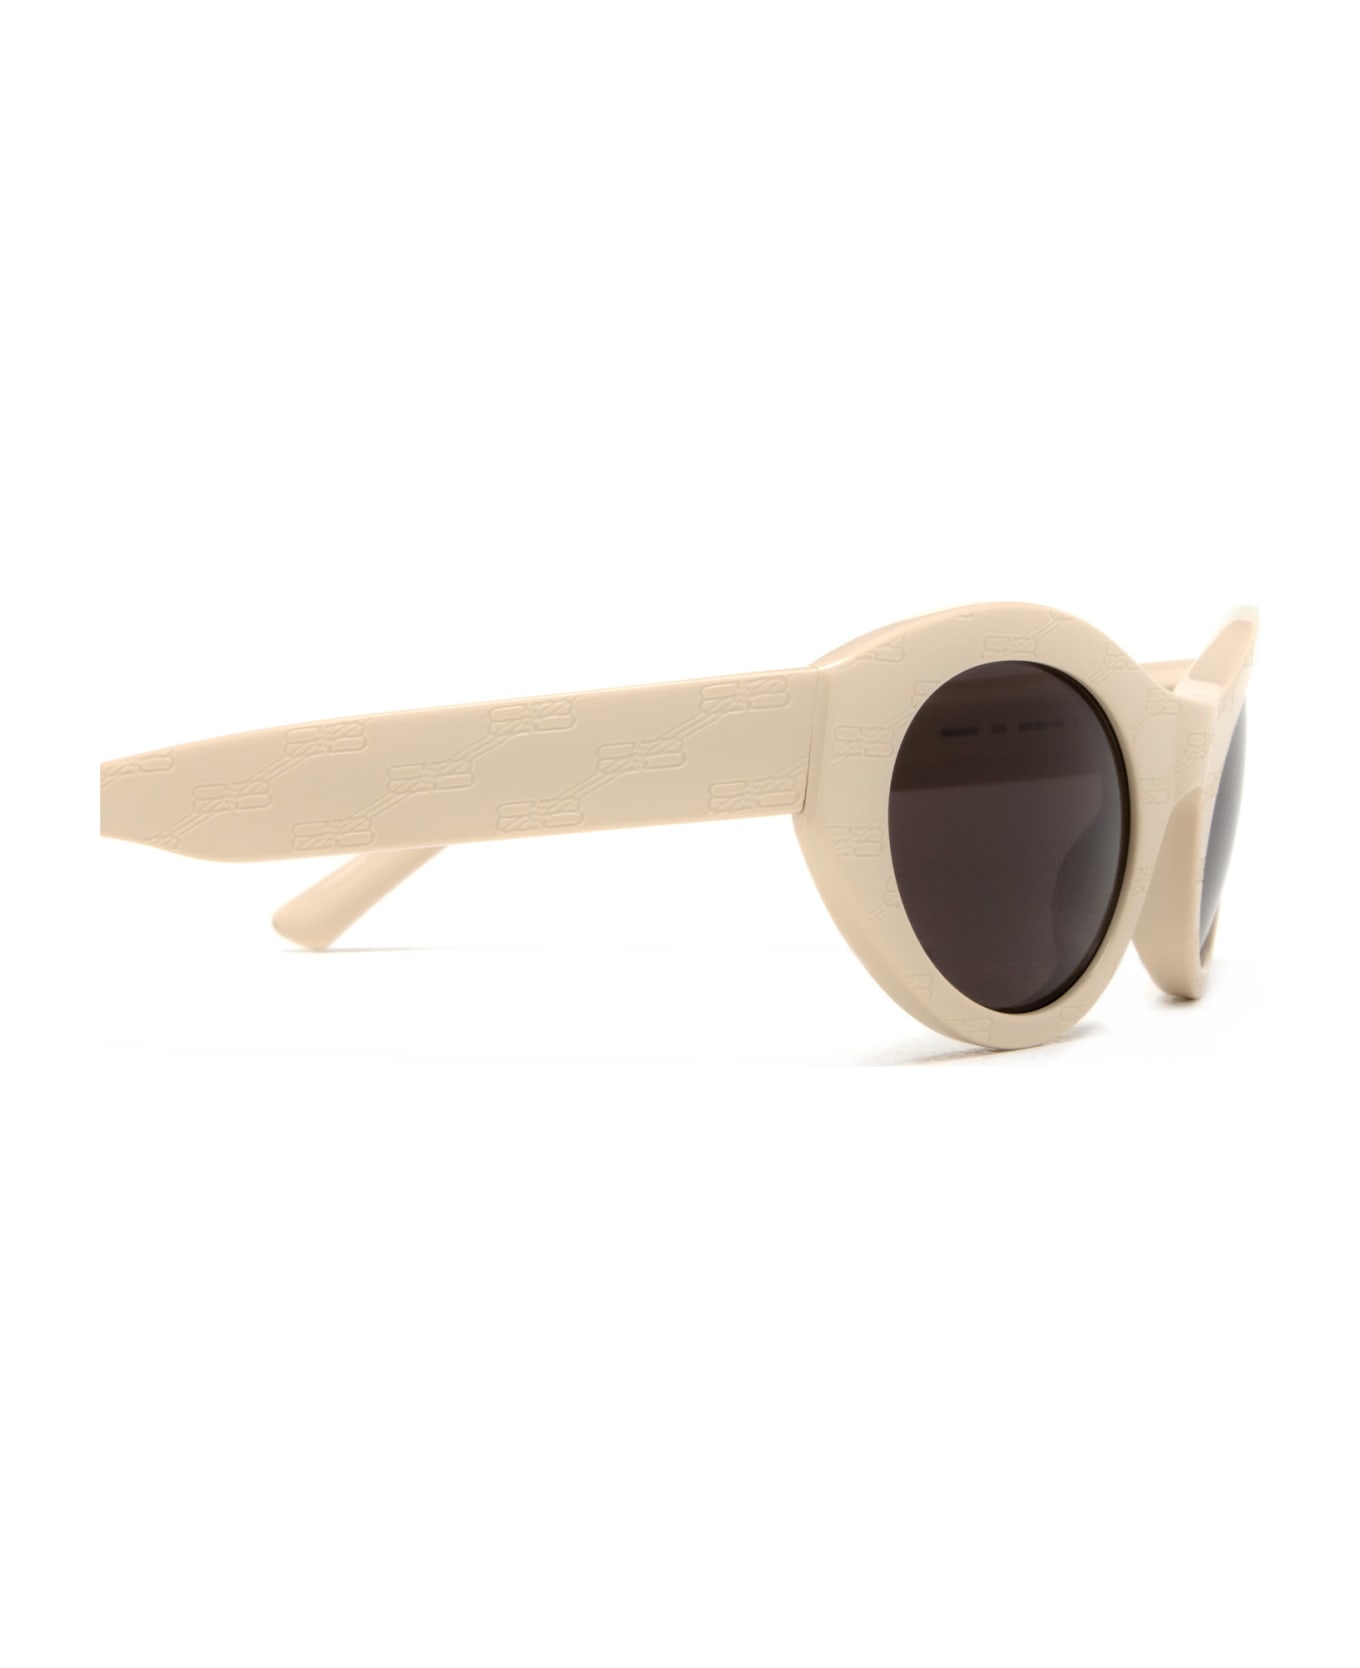 Balenciaga Eyewear Bb0250s Sunglasses - Beige